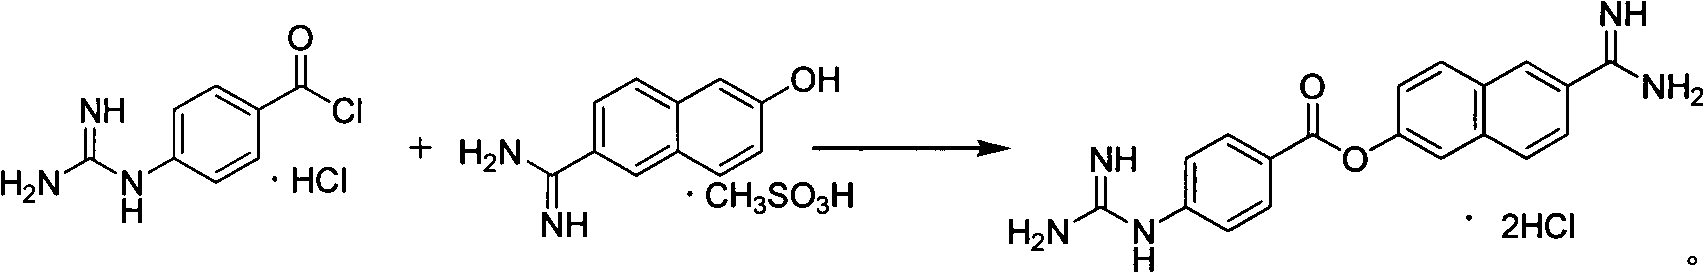 Method for preparing nafamostat hydrochloride and nafamostat mesylate